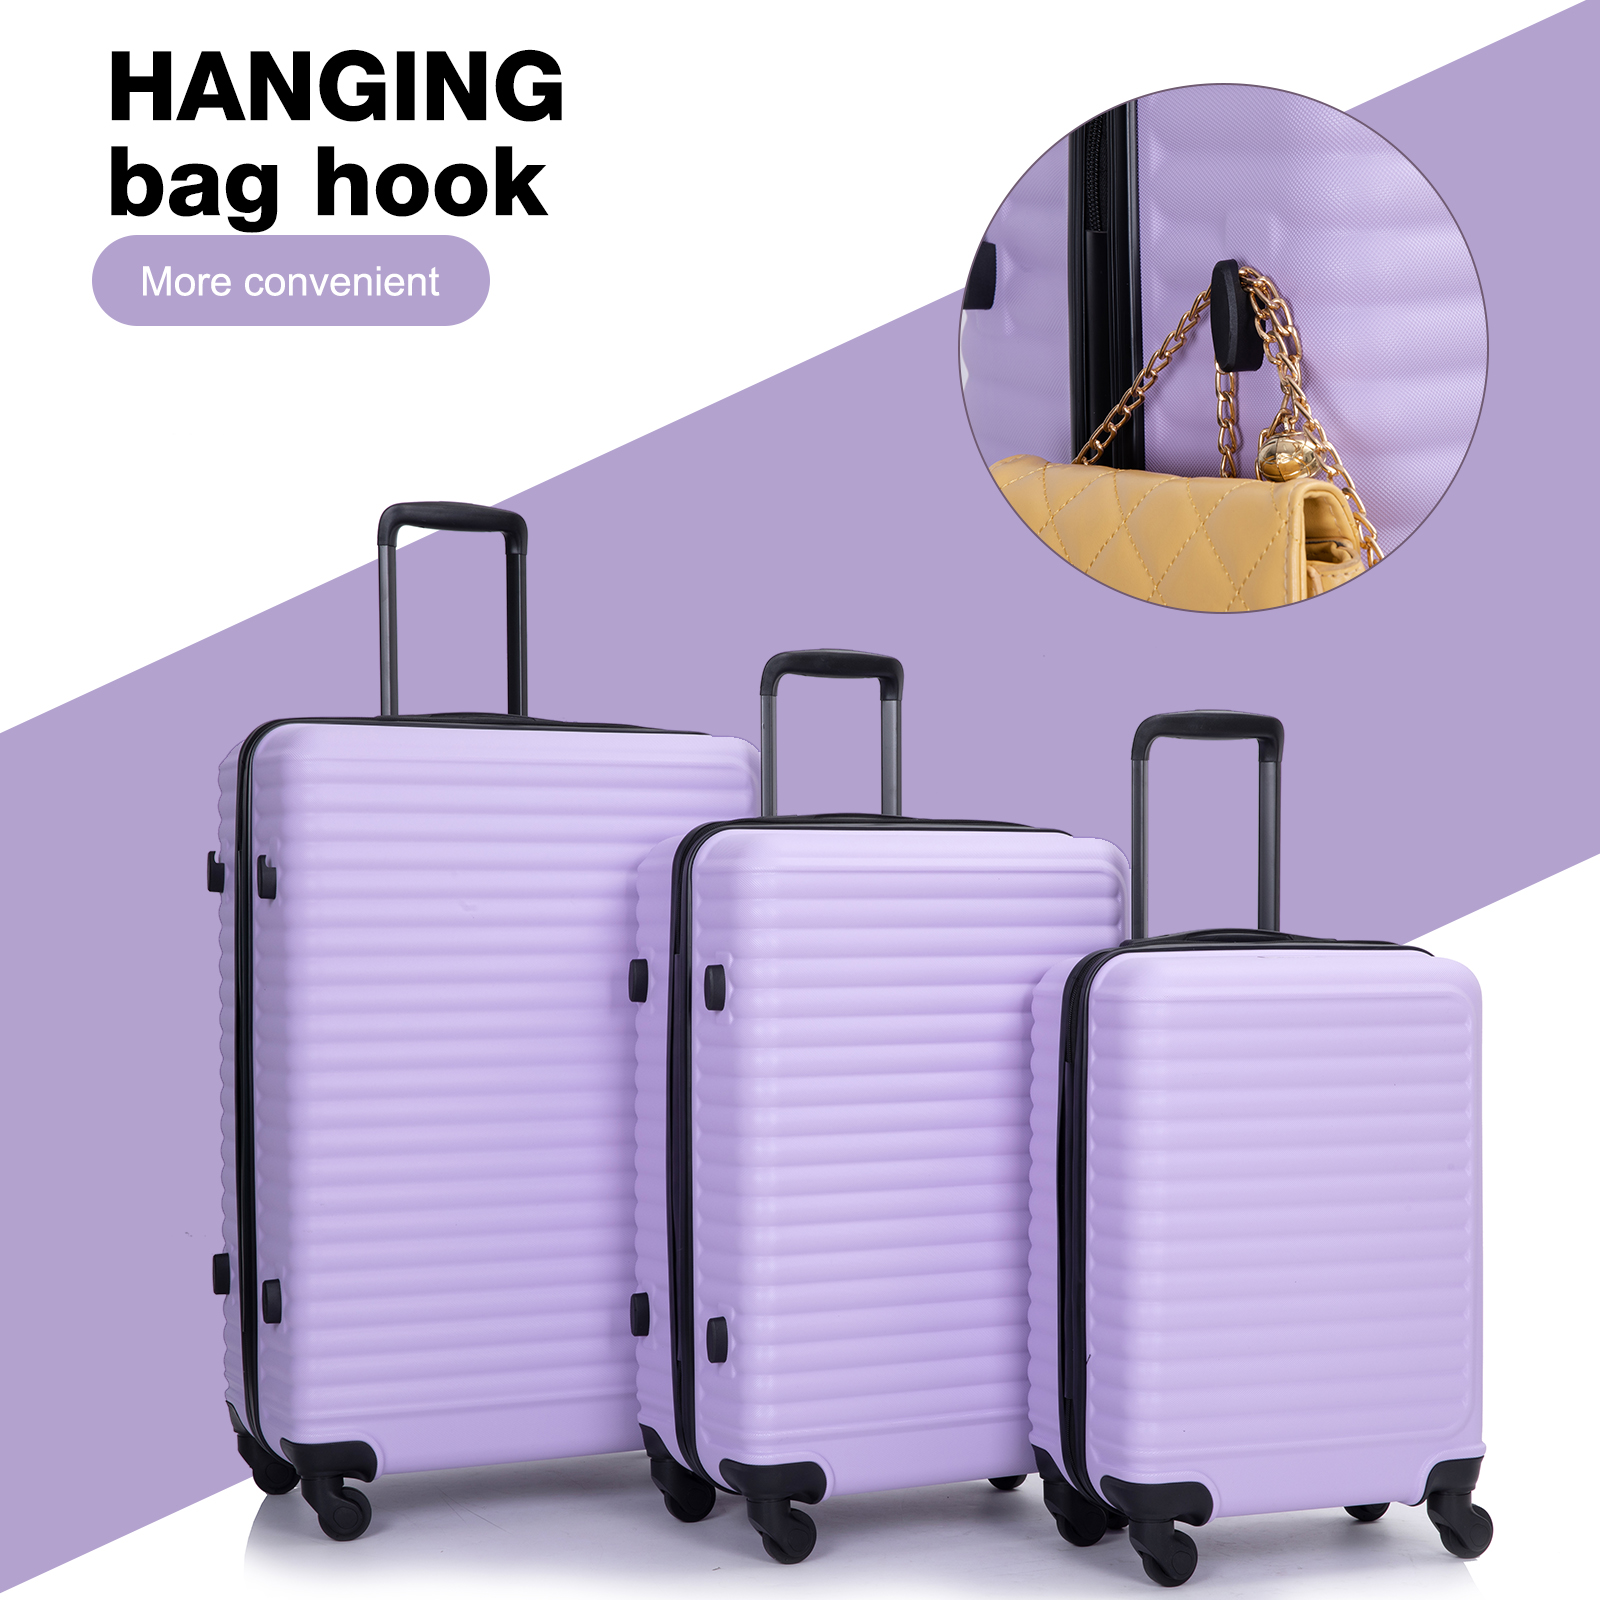 Travelhouse 3 Piece Hardside Luggage Set Hardshell Lightweight Suitcase with TSA Lock Spinner Wheels 20in24in28in.(Light Purple) - image 4 of 8